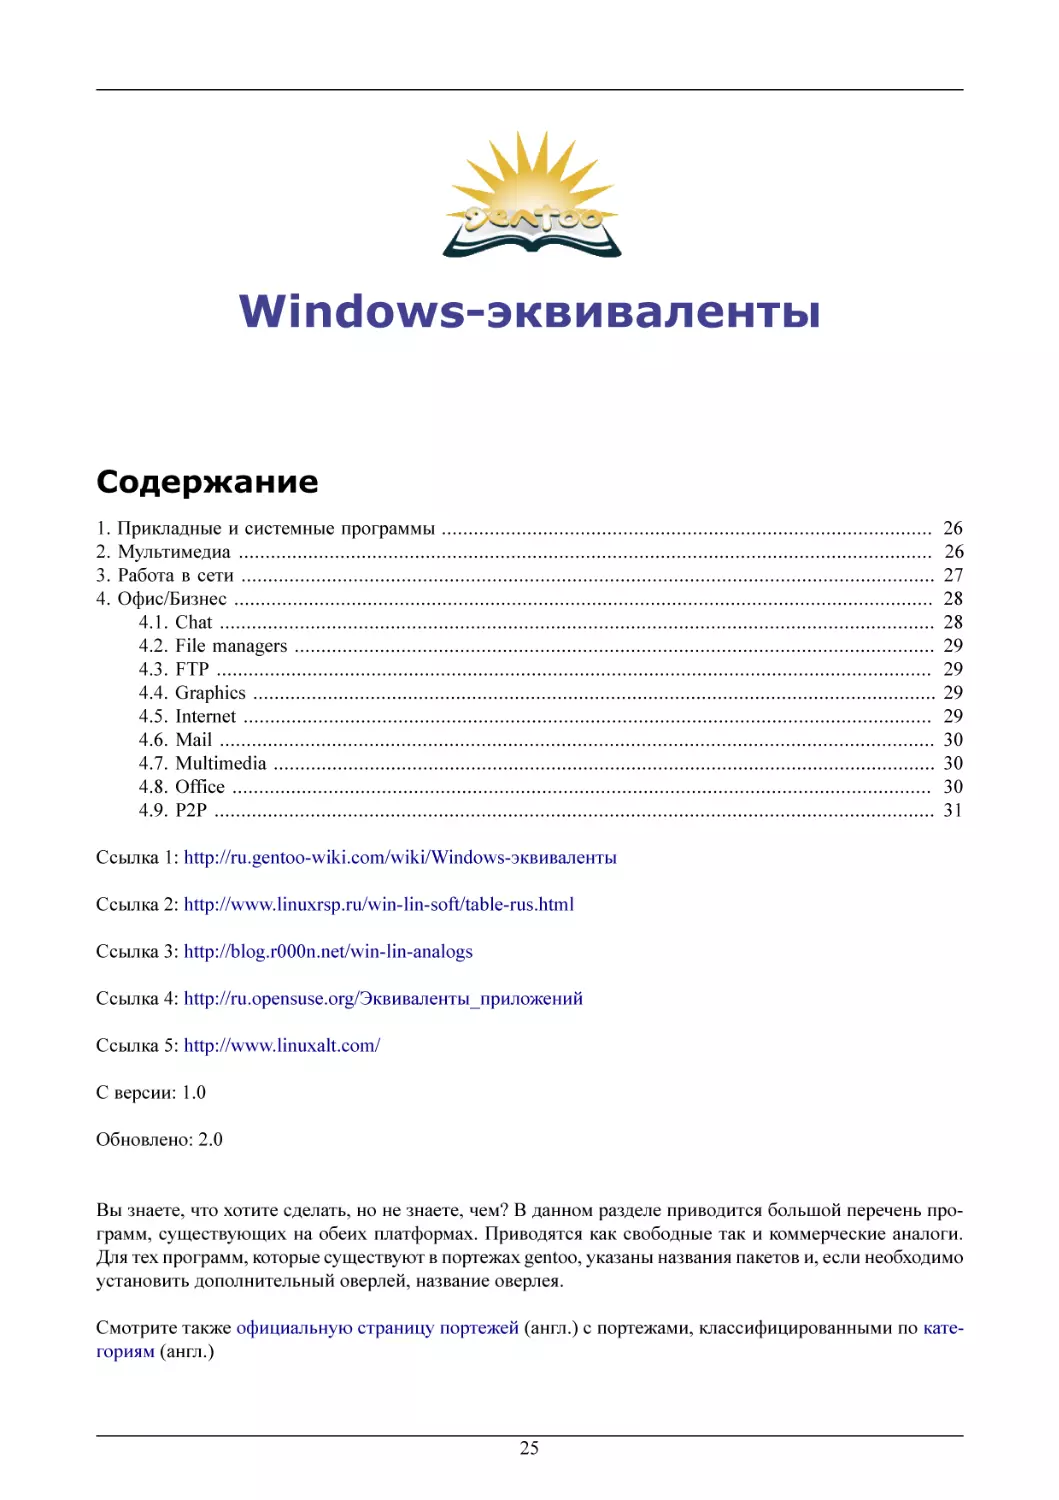 Windows-эквиваленты